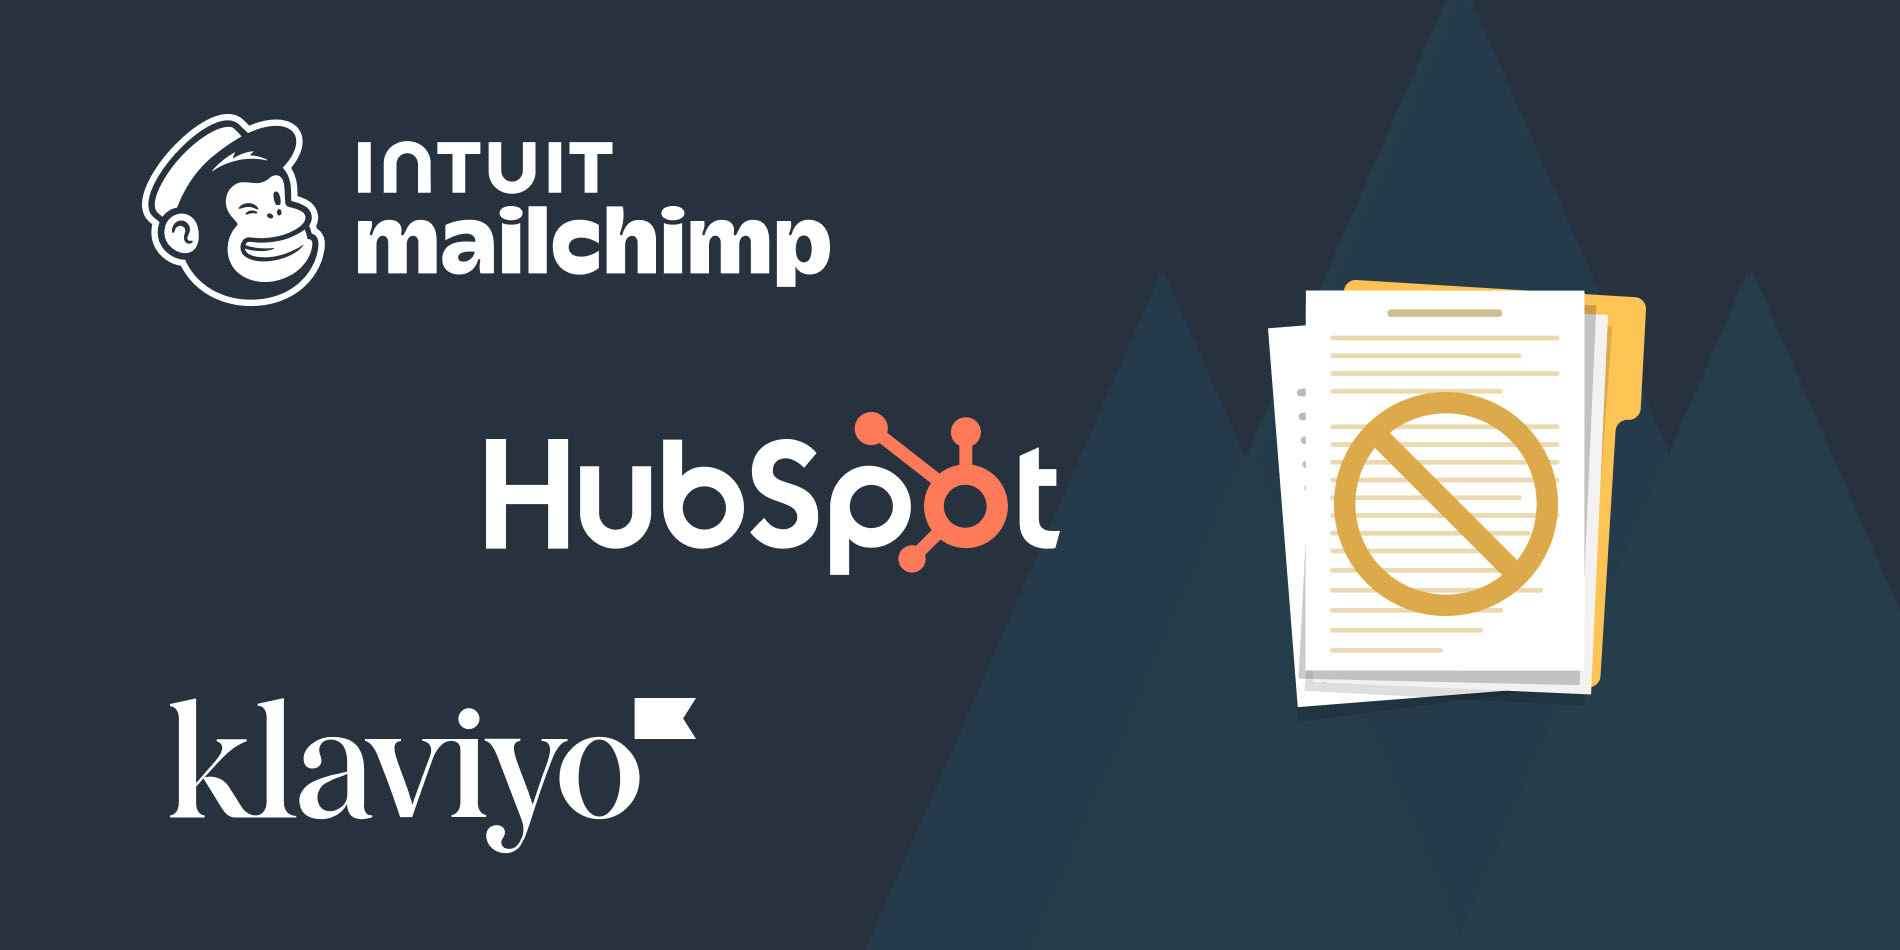 mailchimp hubspot and klaviyo logos denying access to a file